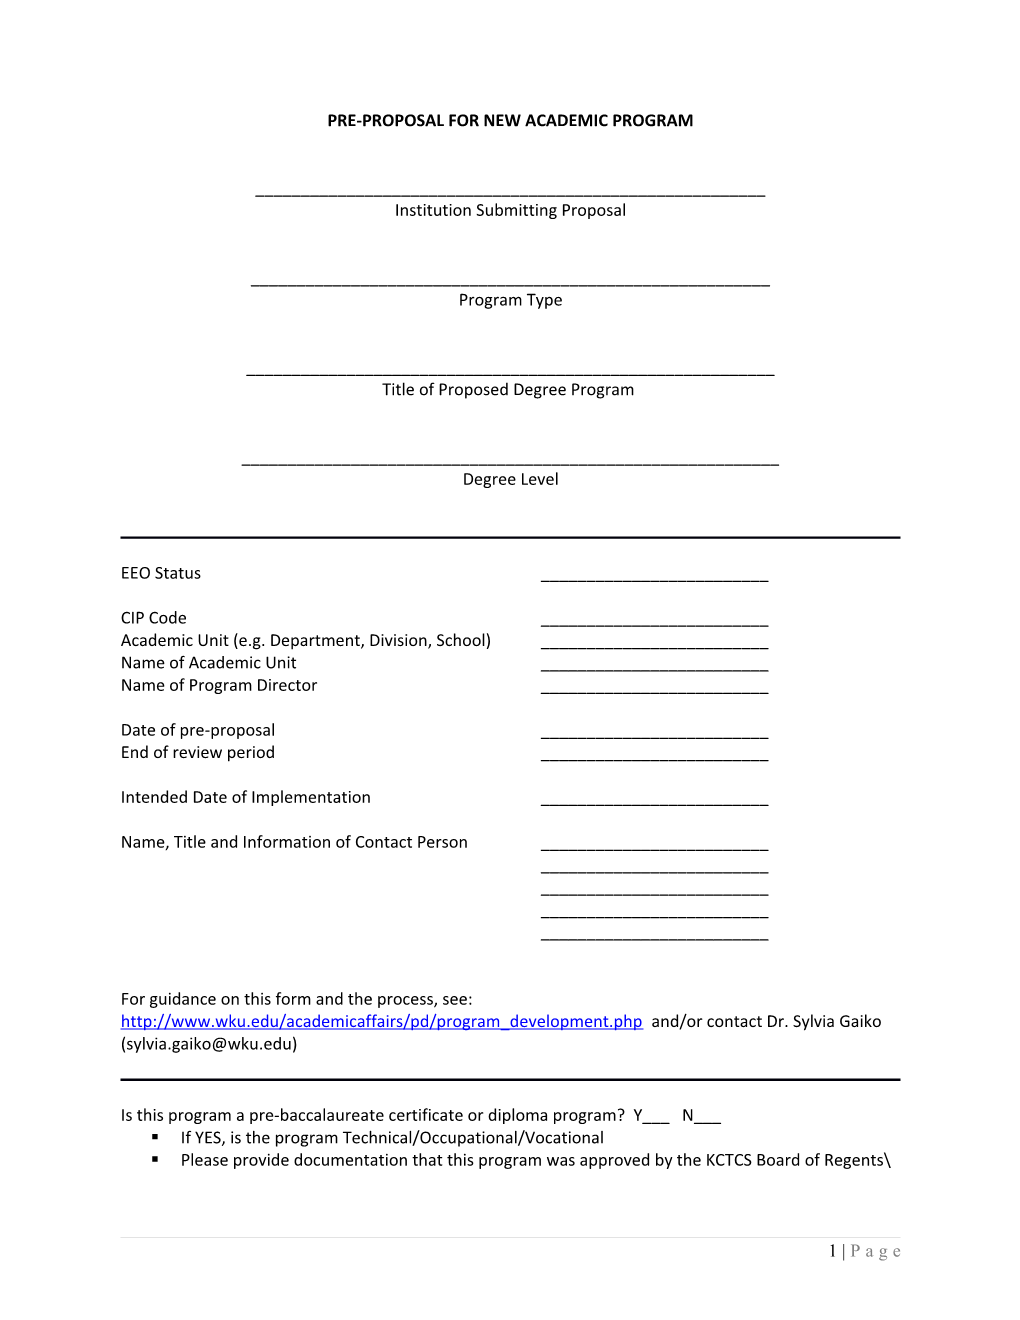 CPE Pre-Proposal Form